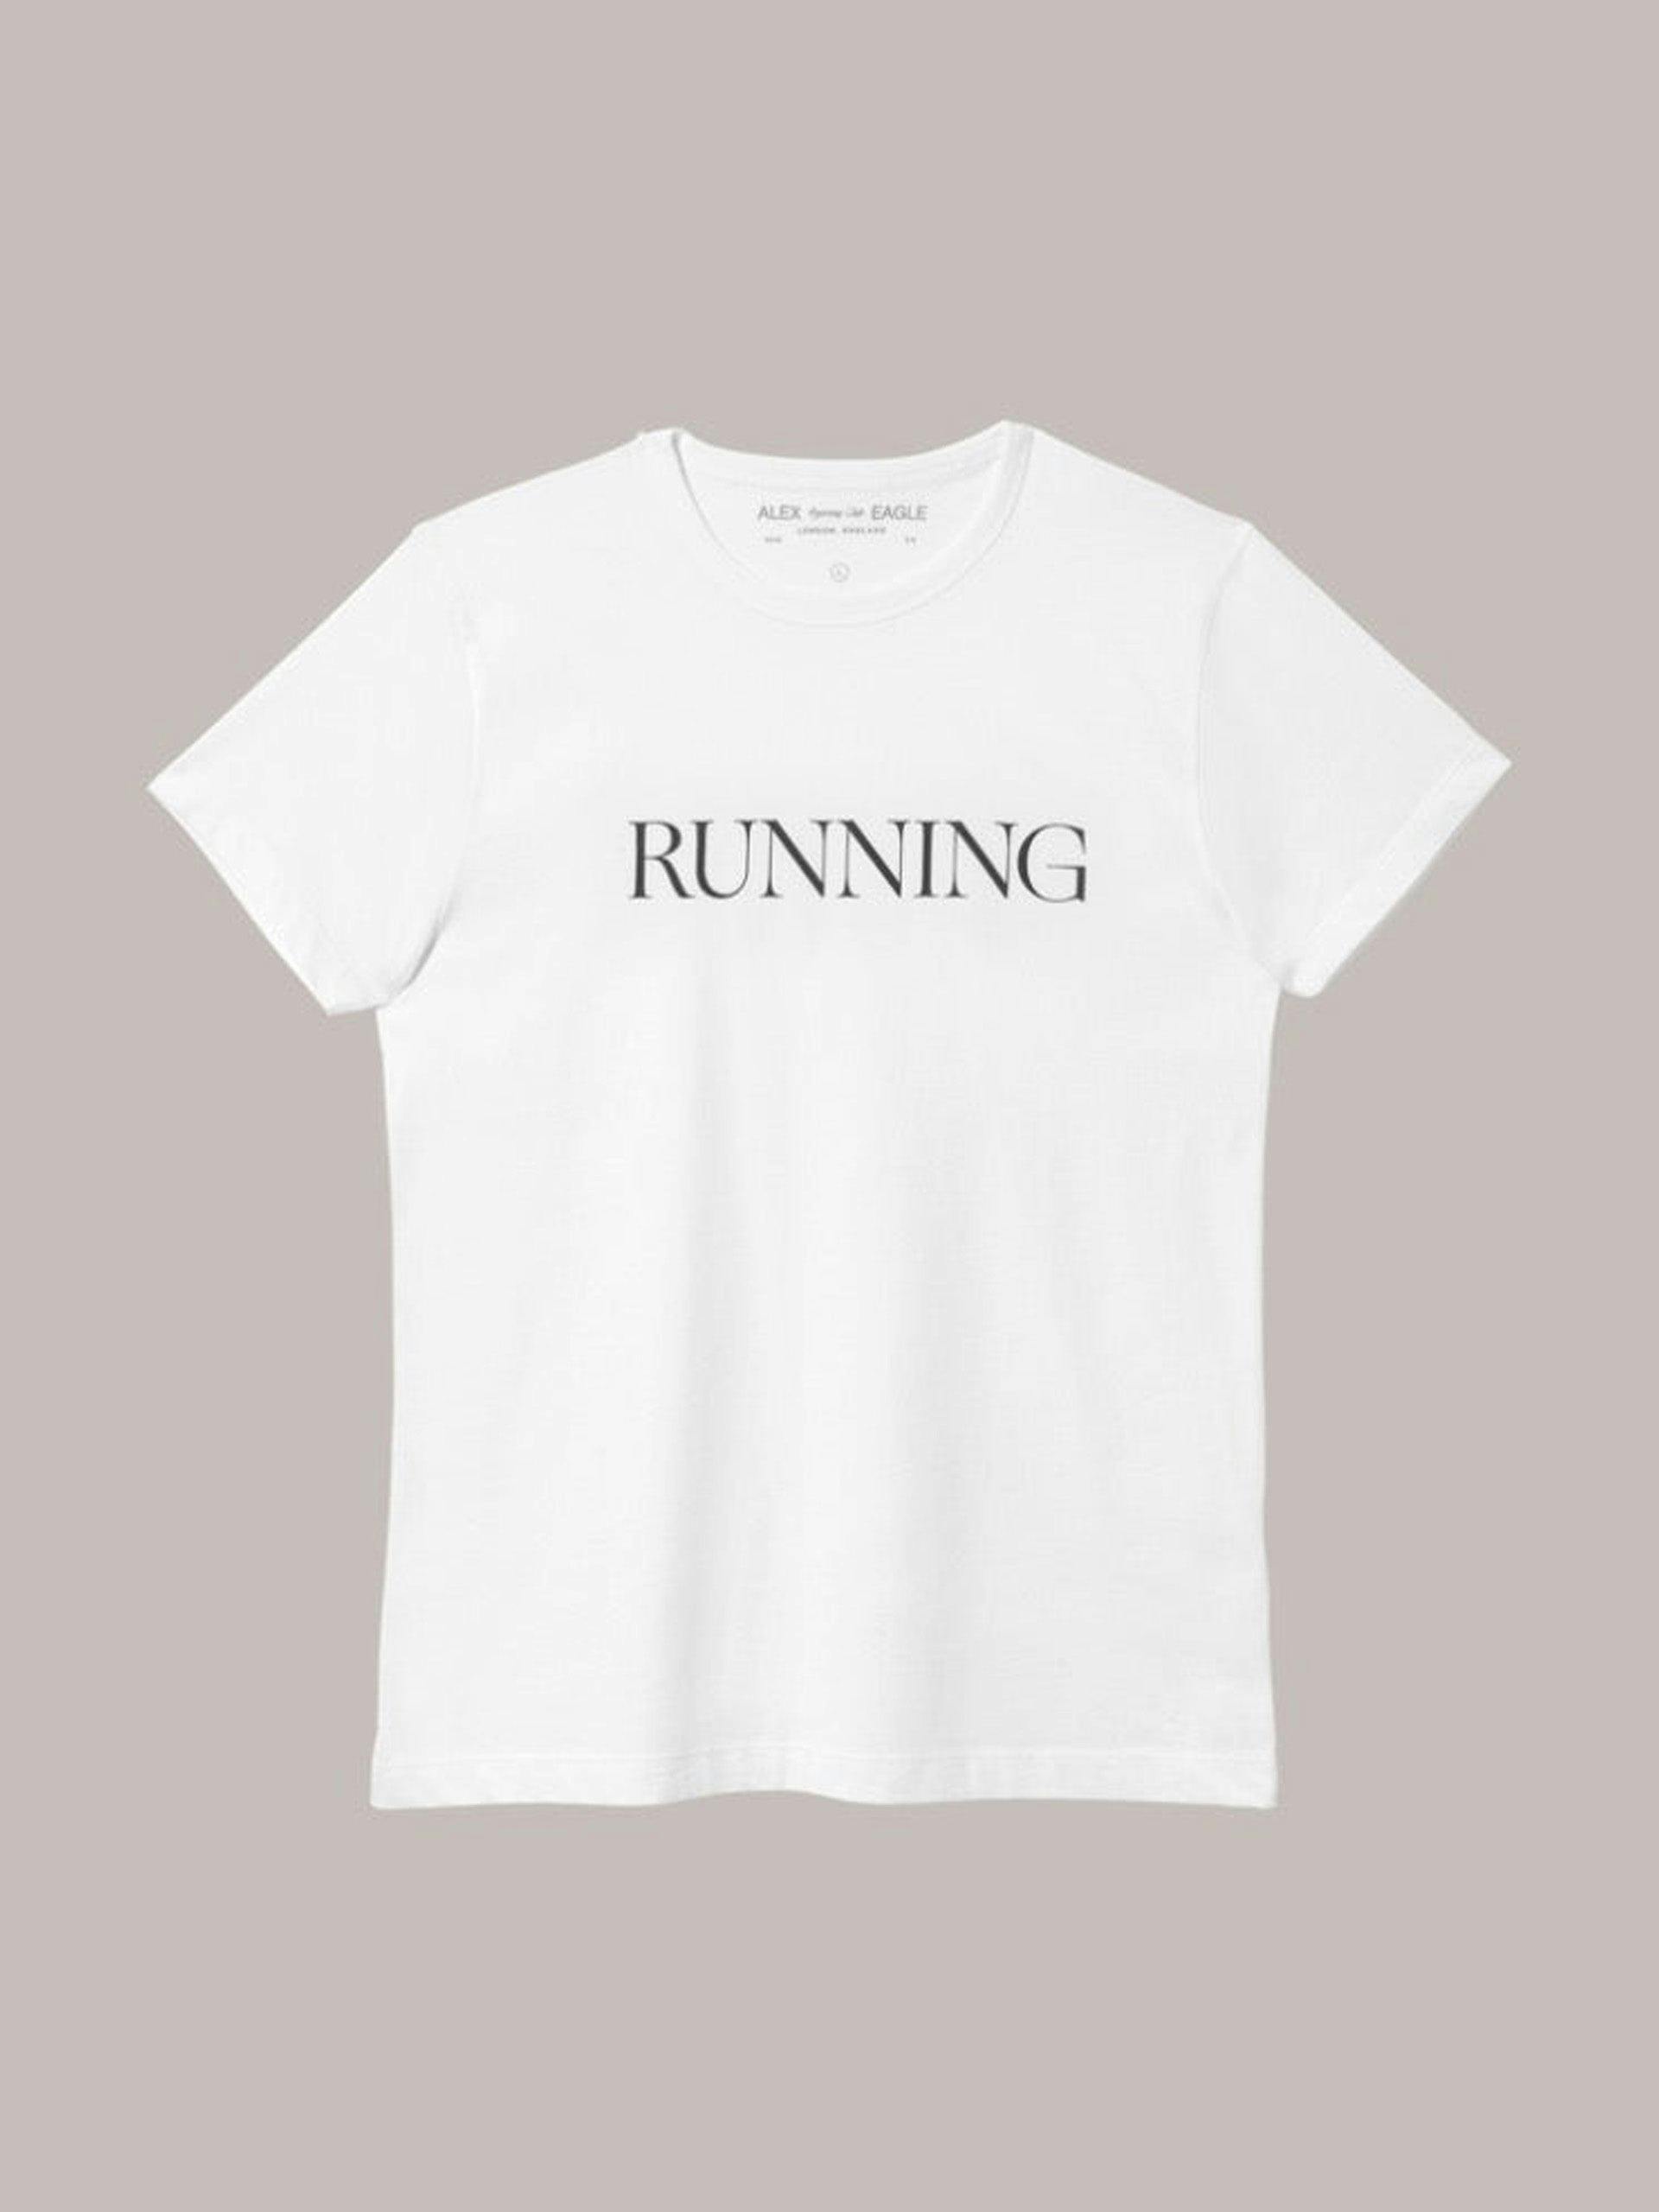 Running t-shirt